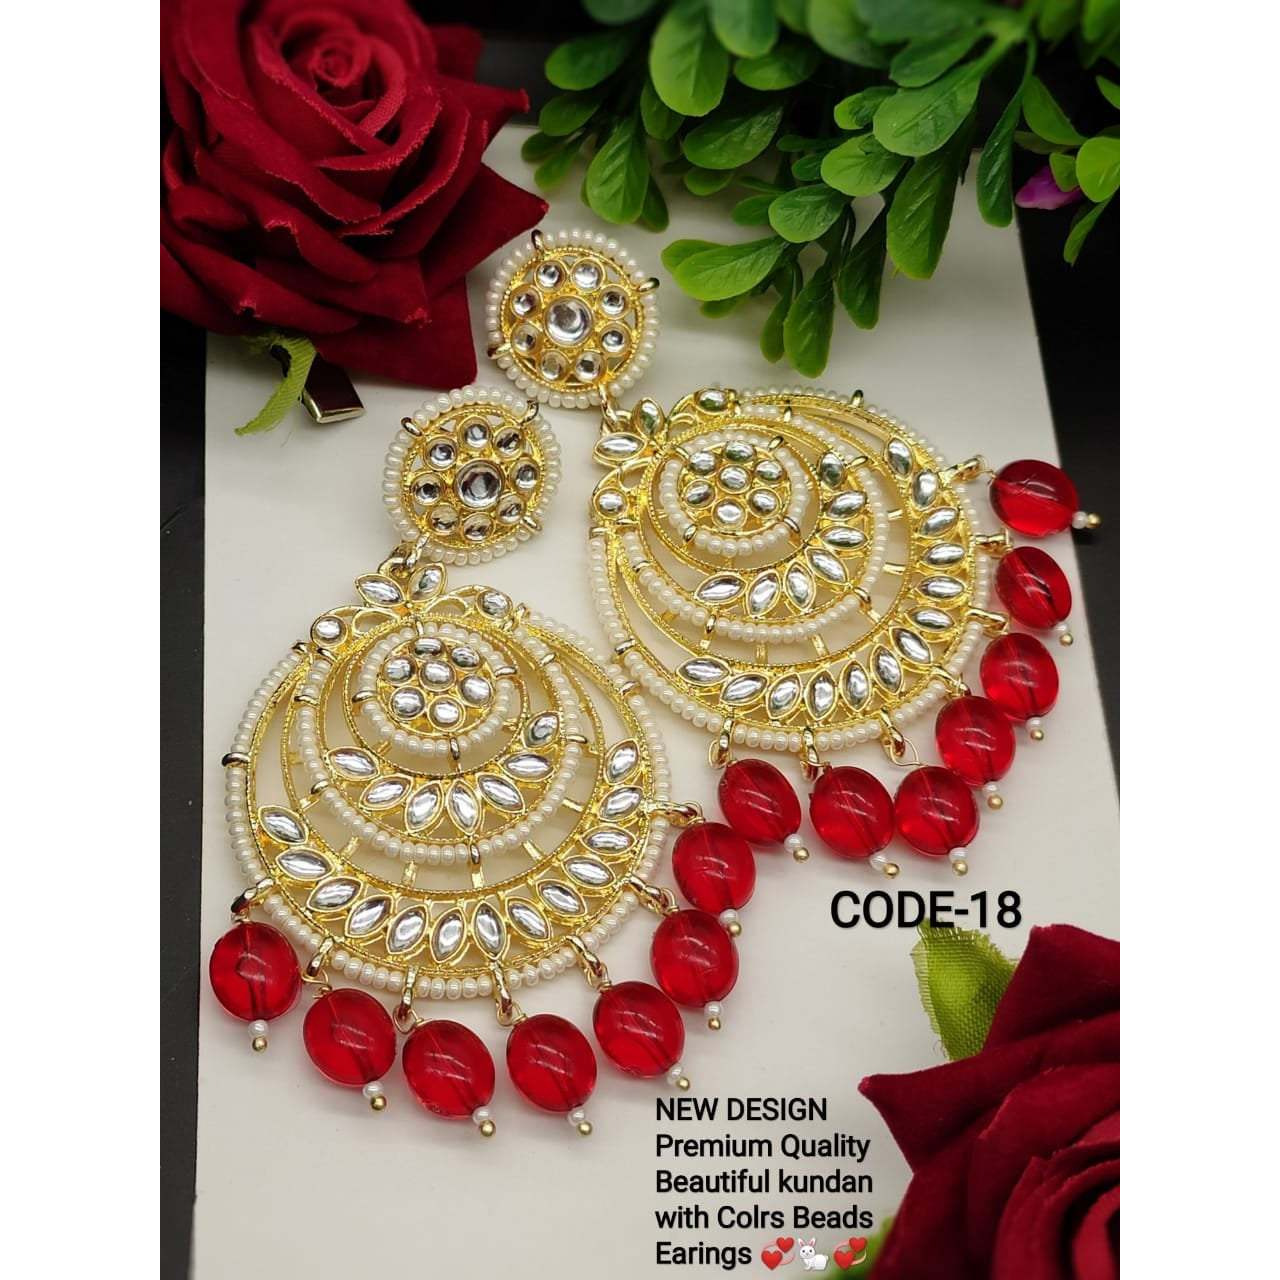 Kundan pearl chandbali Earrings with colorful beads, Indian earrings, Indian jewellery, wedding jewellery, gifts for her, anniversary gift